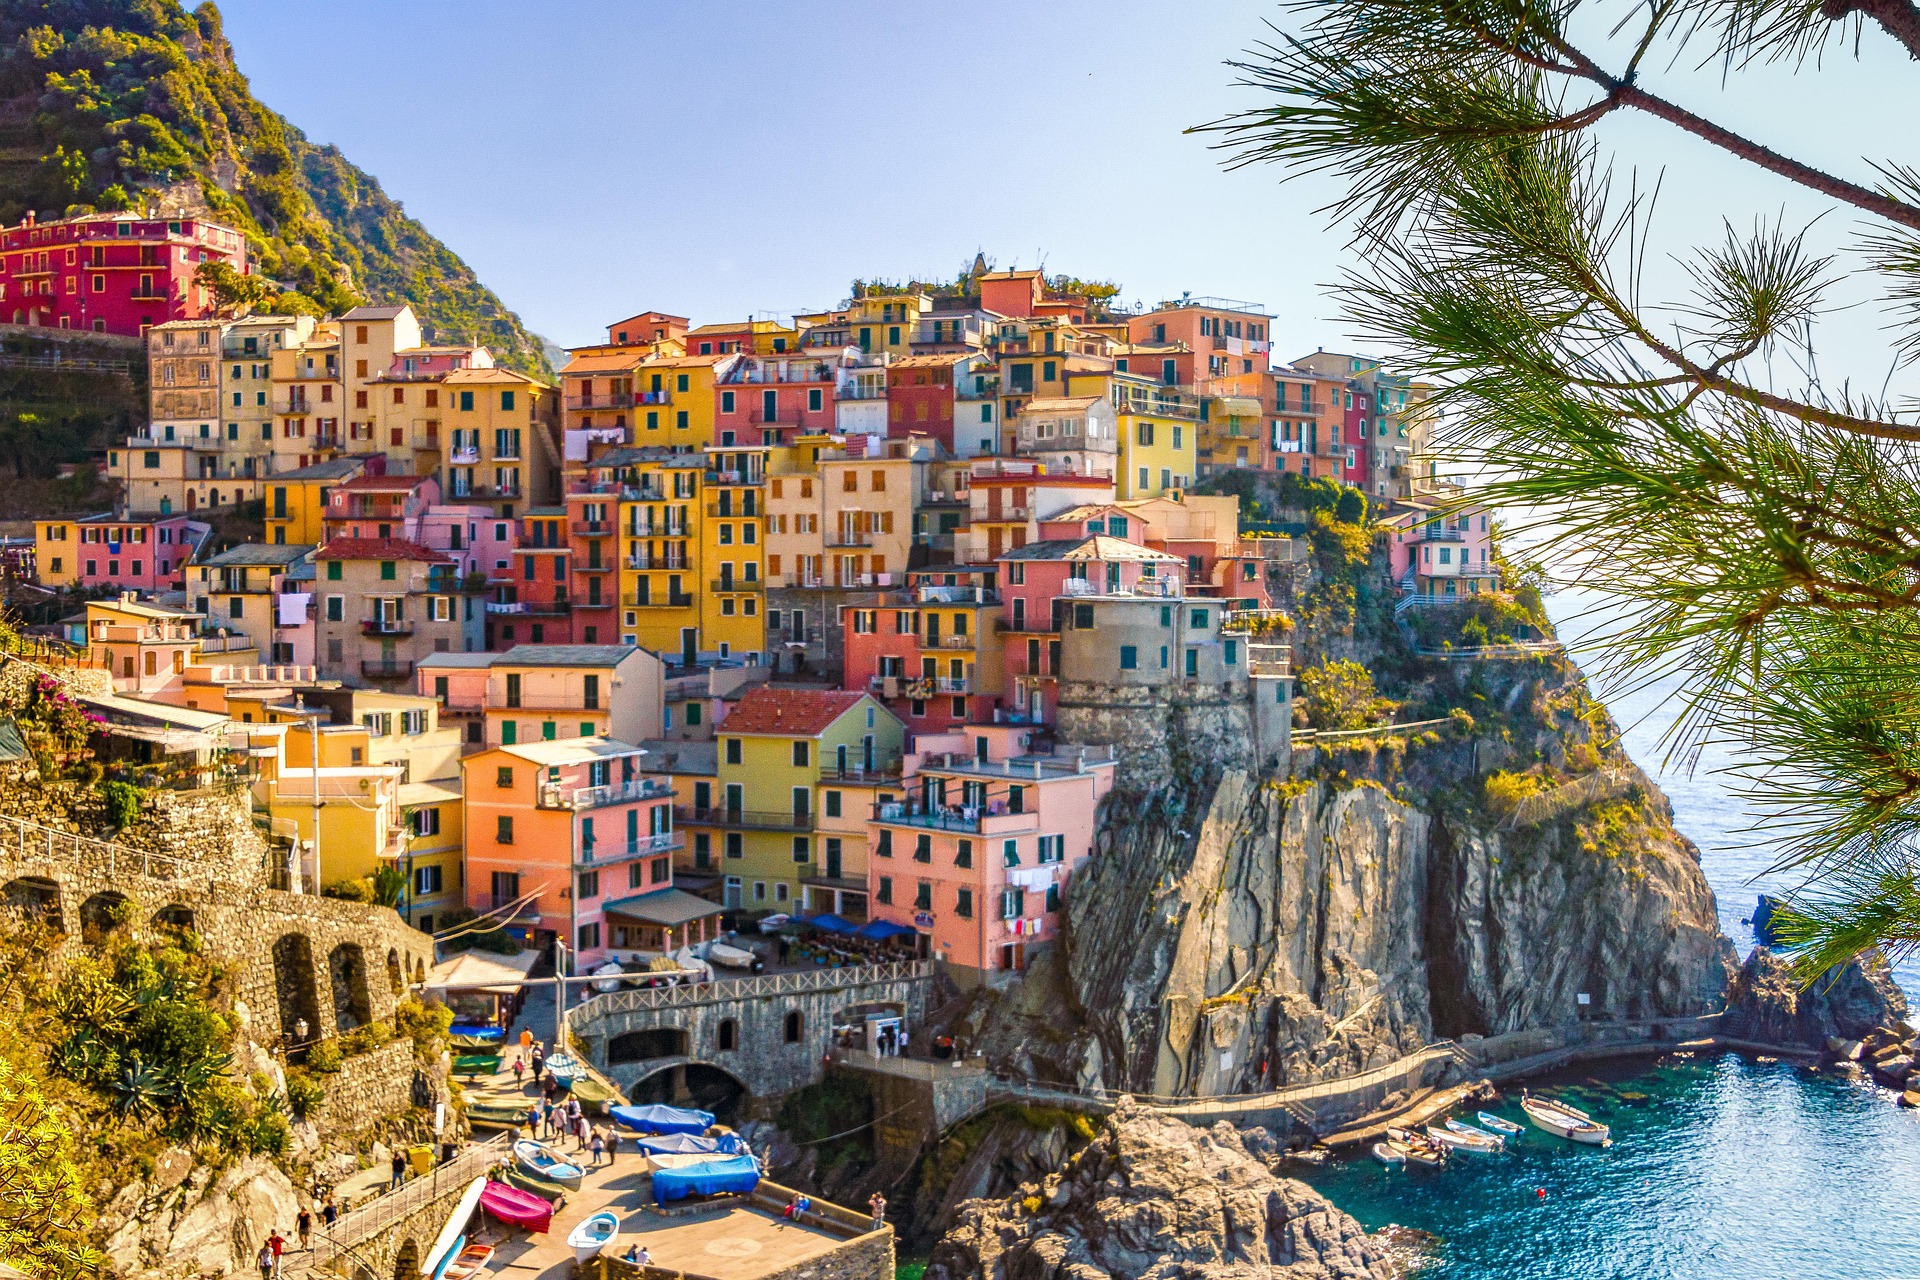 Putovanje,Toskana, Firenca, evropski gradovi, Montecatini, city break, Cinque Terre